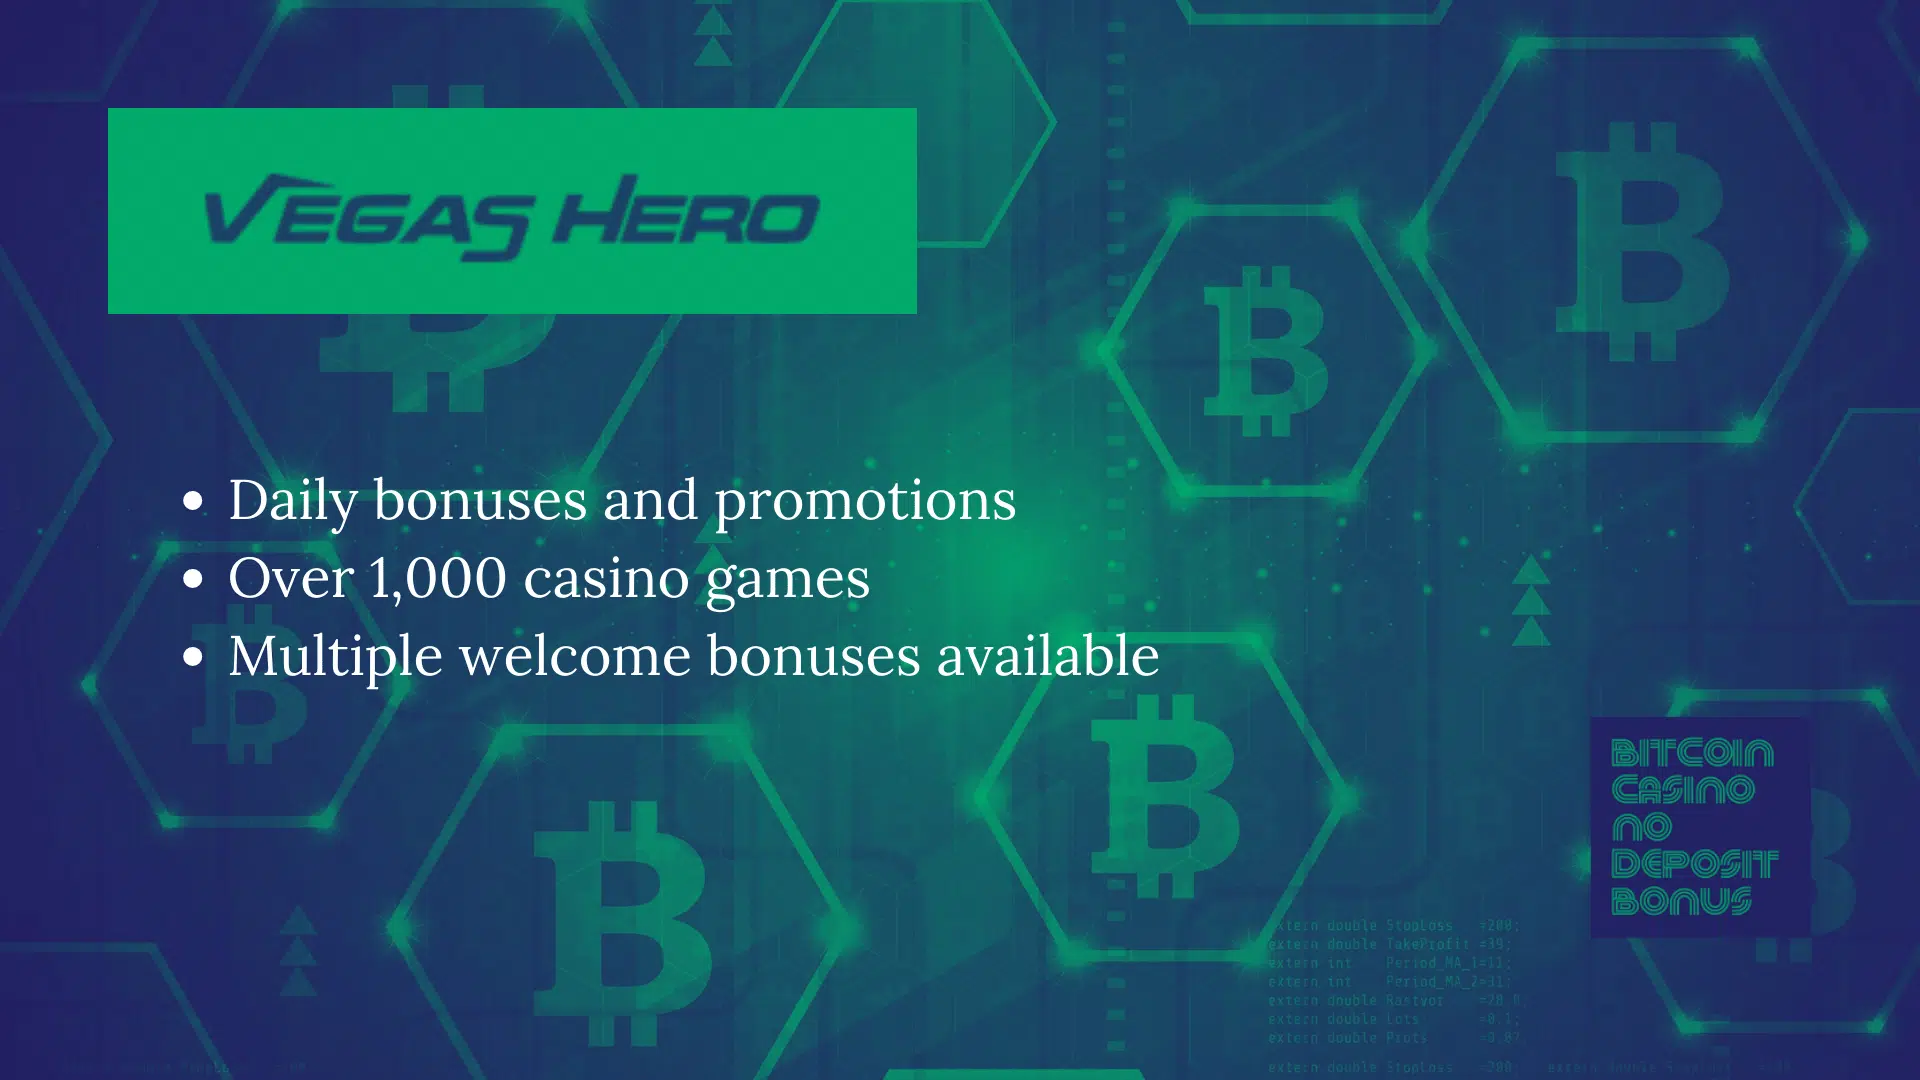 You are currently viewing Vegas Hero Casino Bonus Codes – Vegashero.com Free Spins December 2022